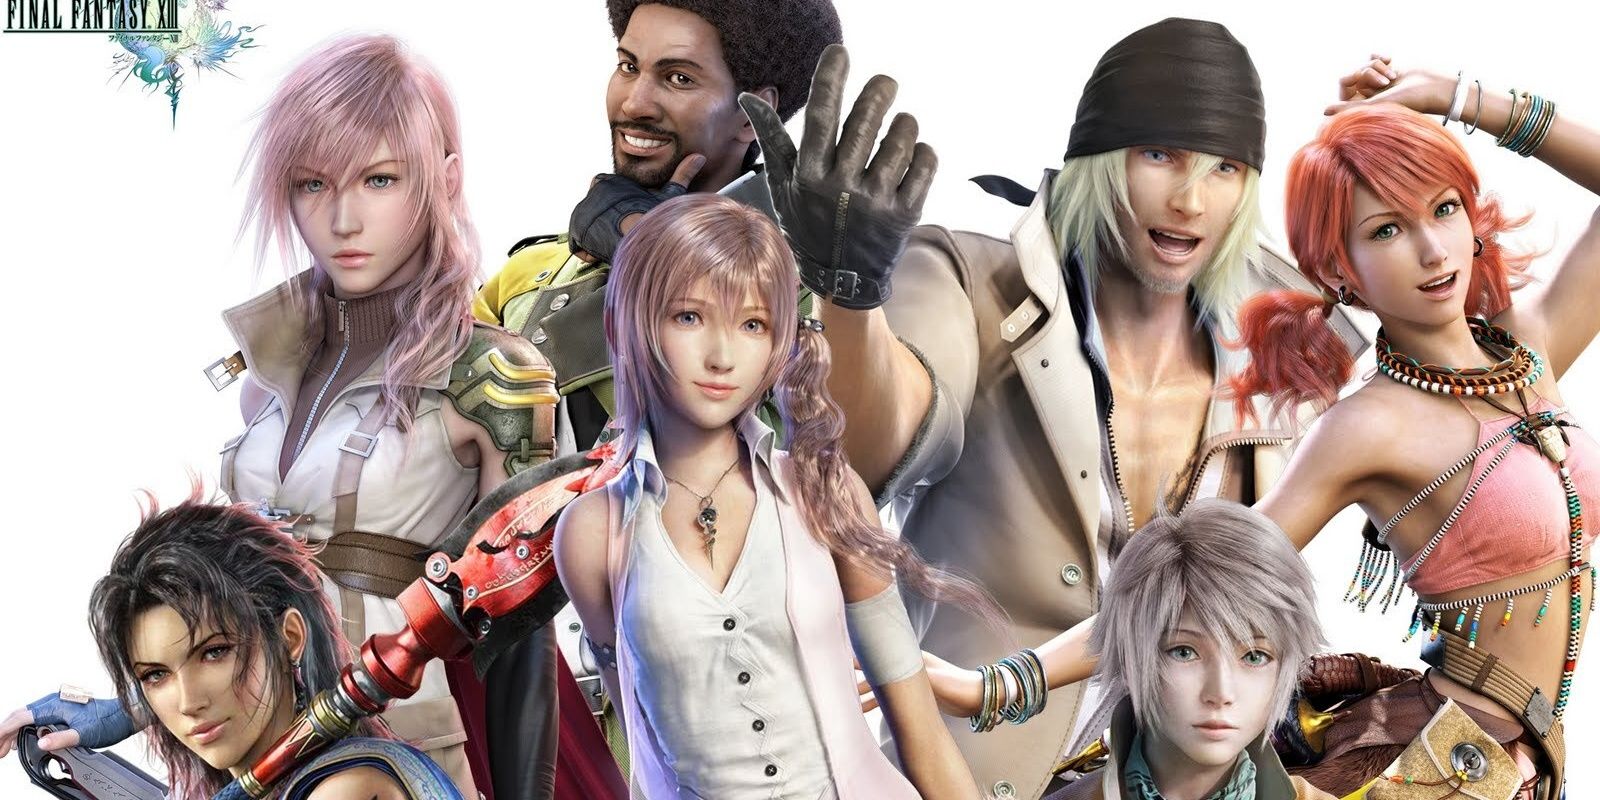 Final Fantasy 13 characters, Lightining, Snow Villiers, Serah Farron, Djah KAtzroy, Sephiroth